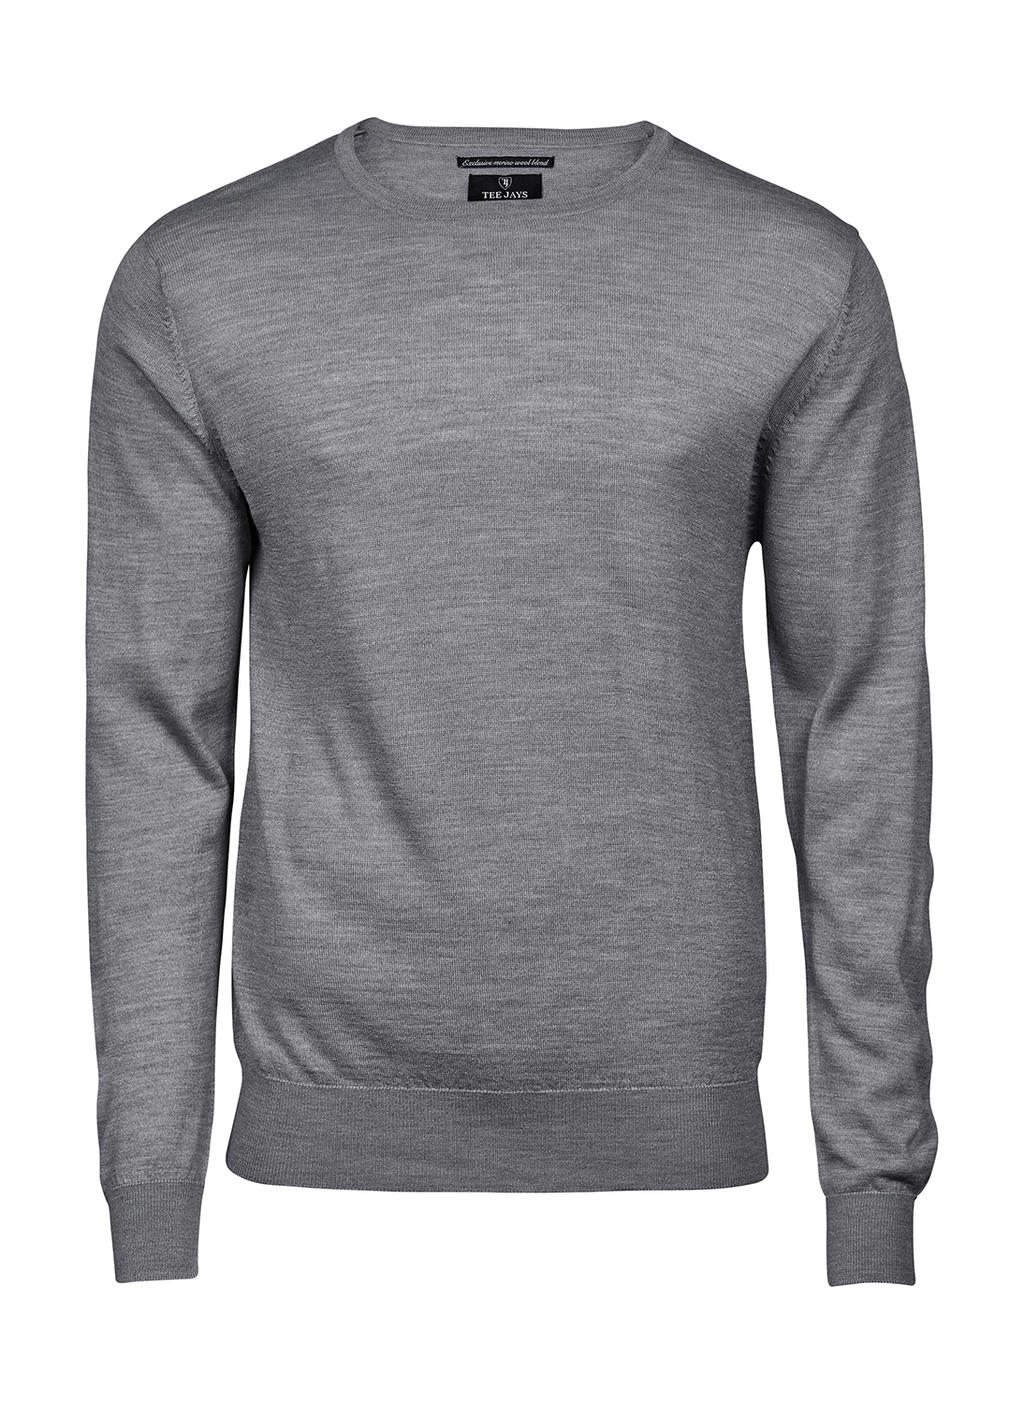  Mens Crew Neck Sweater in Farbe Light Grey